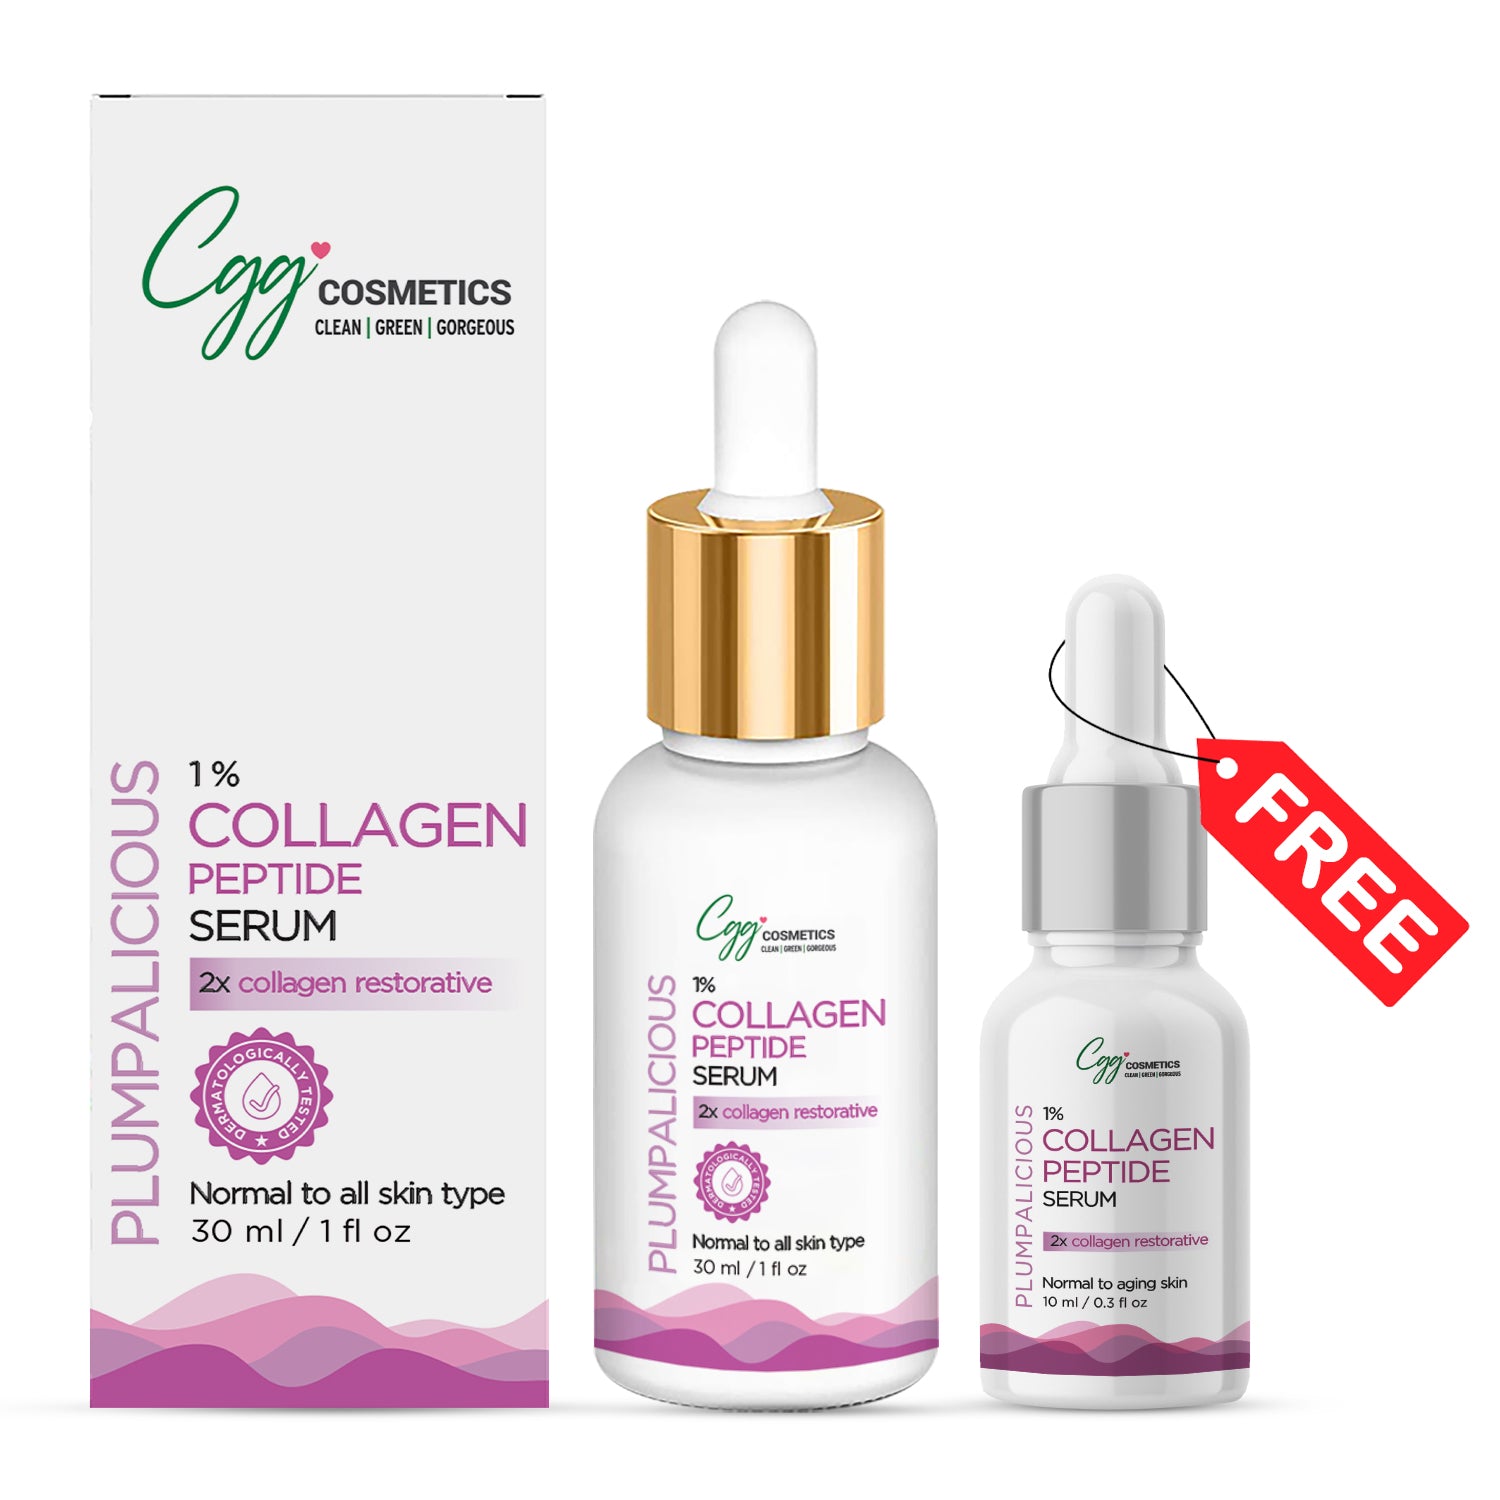 CGG Cosmetics Collagen Peptide Night Facial Serum 30ml & Free 10ml Sample of 1% Collagen Serum